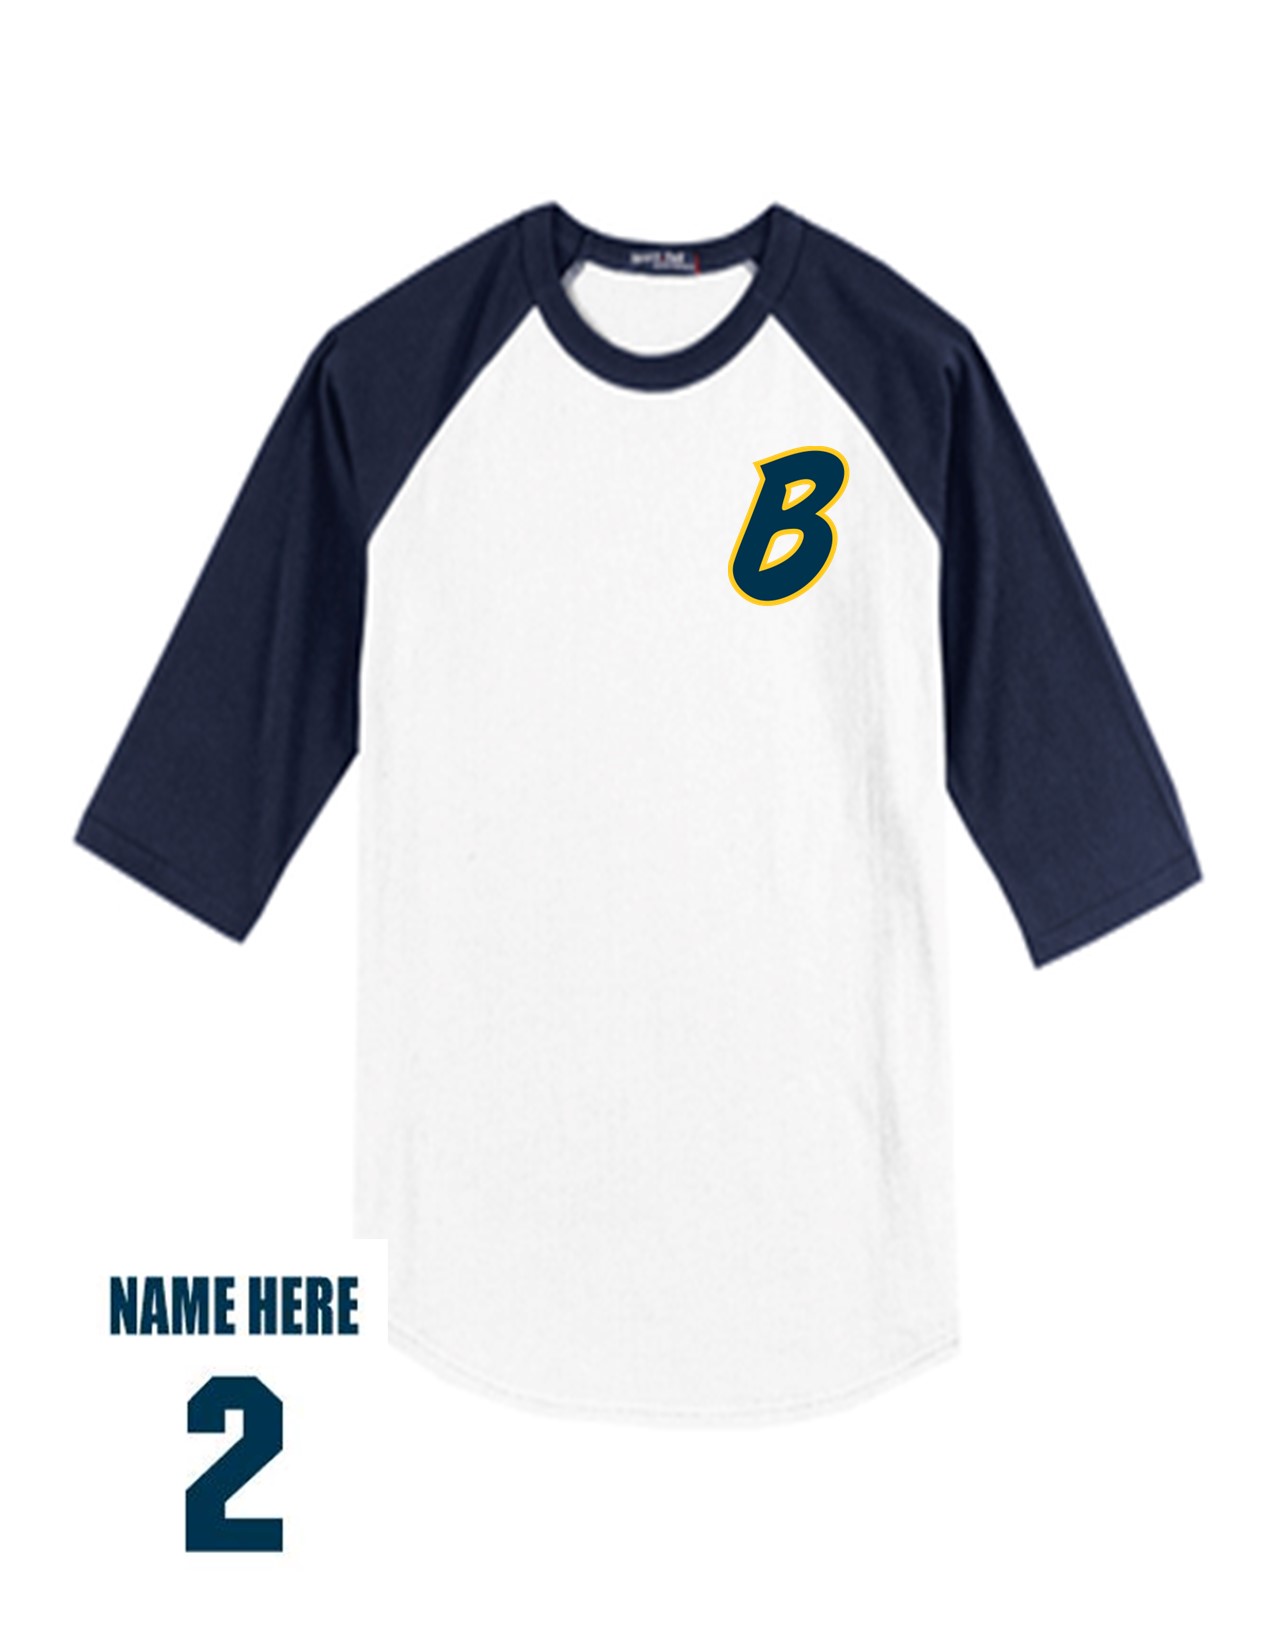 50b Sport-Tek YT200 Youth Baseball 3/4 Raglan 100% Cotton Shirt with Bombers "B" LC Logo